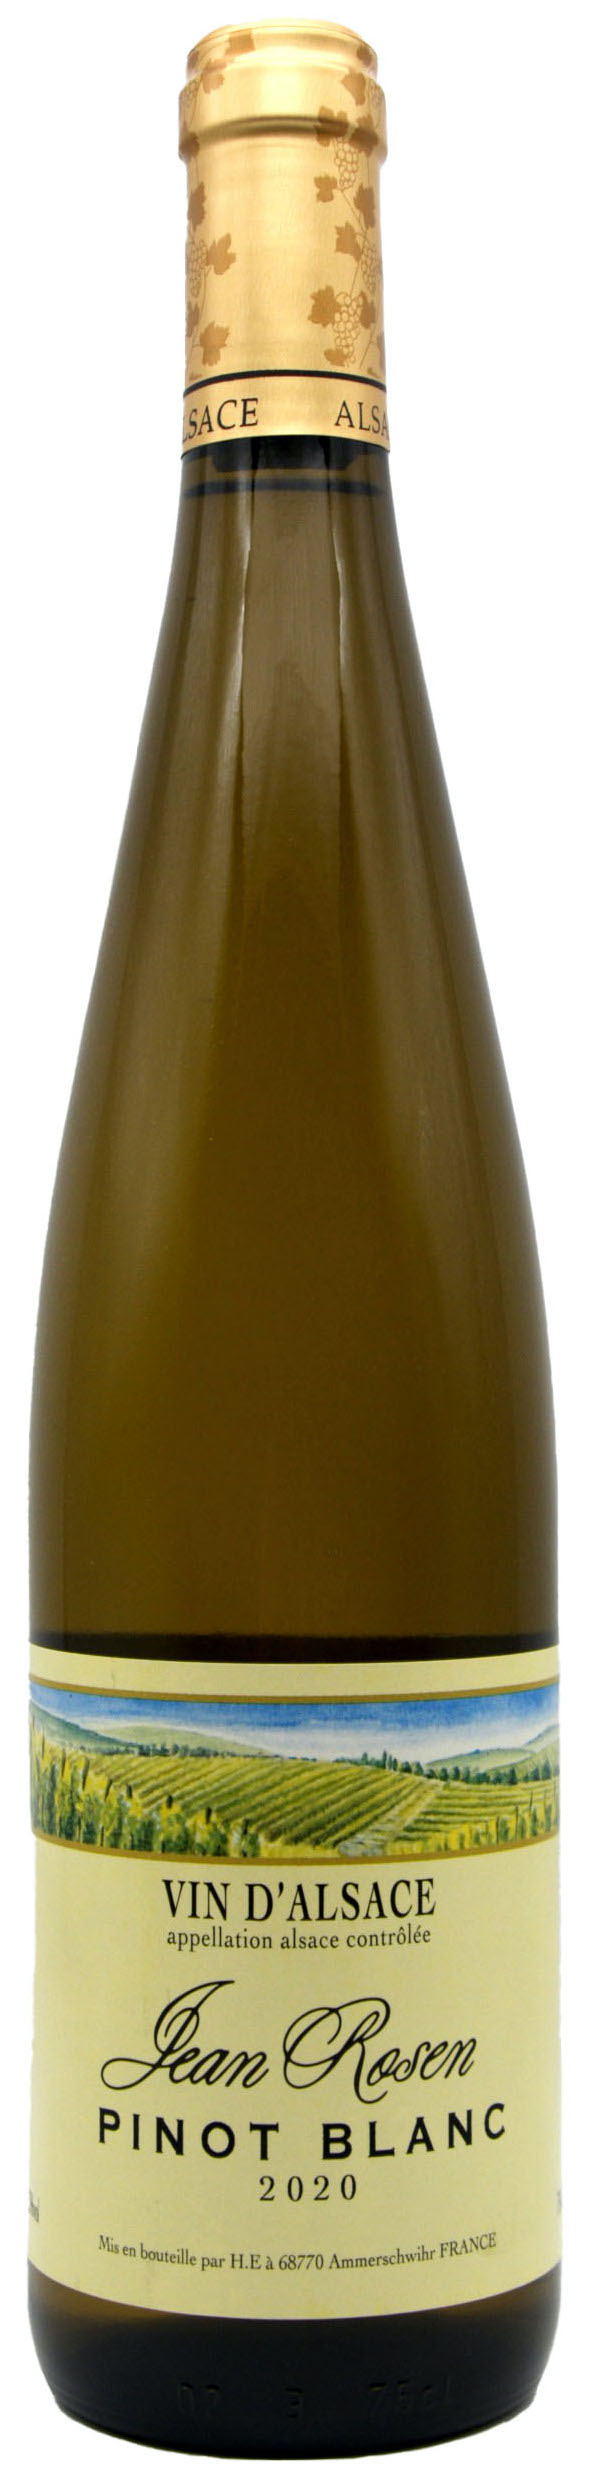 Vin d'Alsace Pinot Blanc 2020